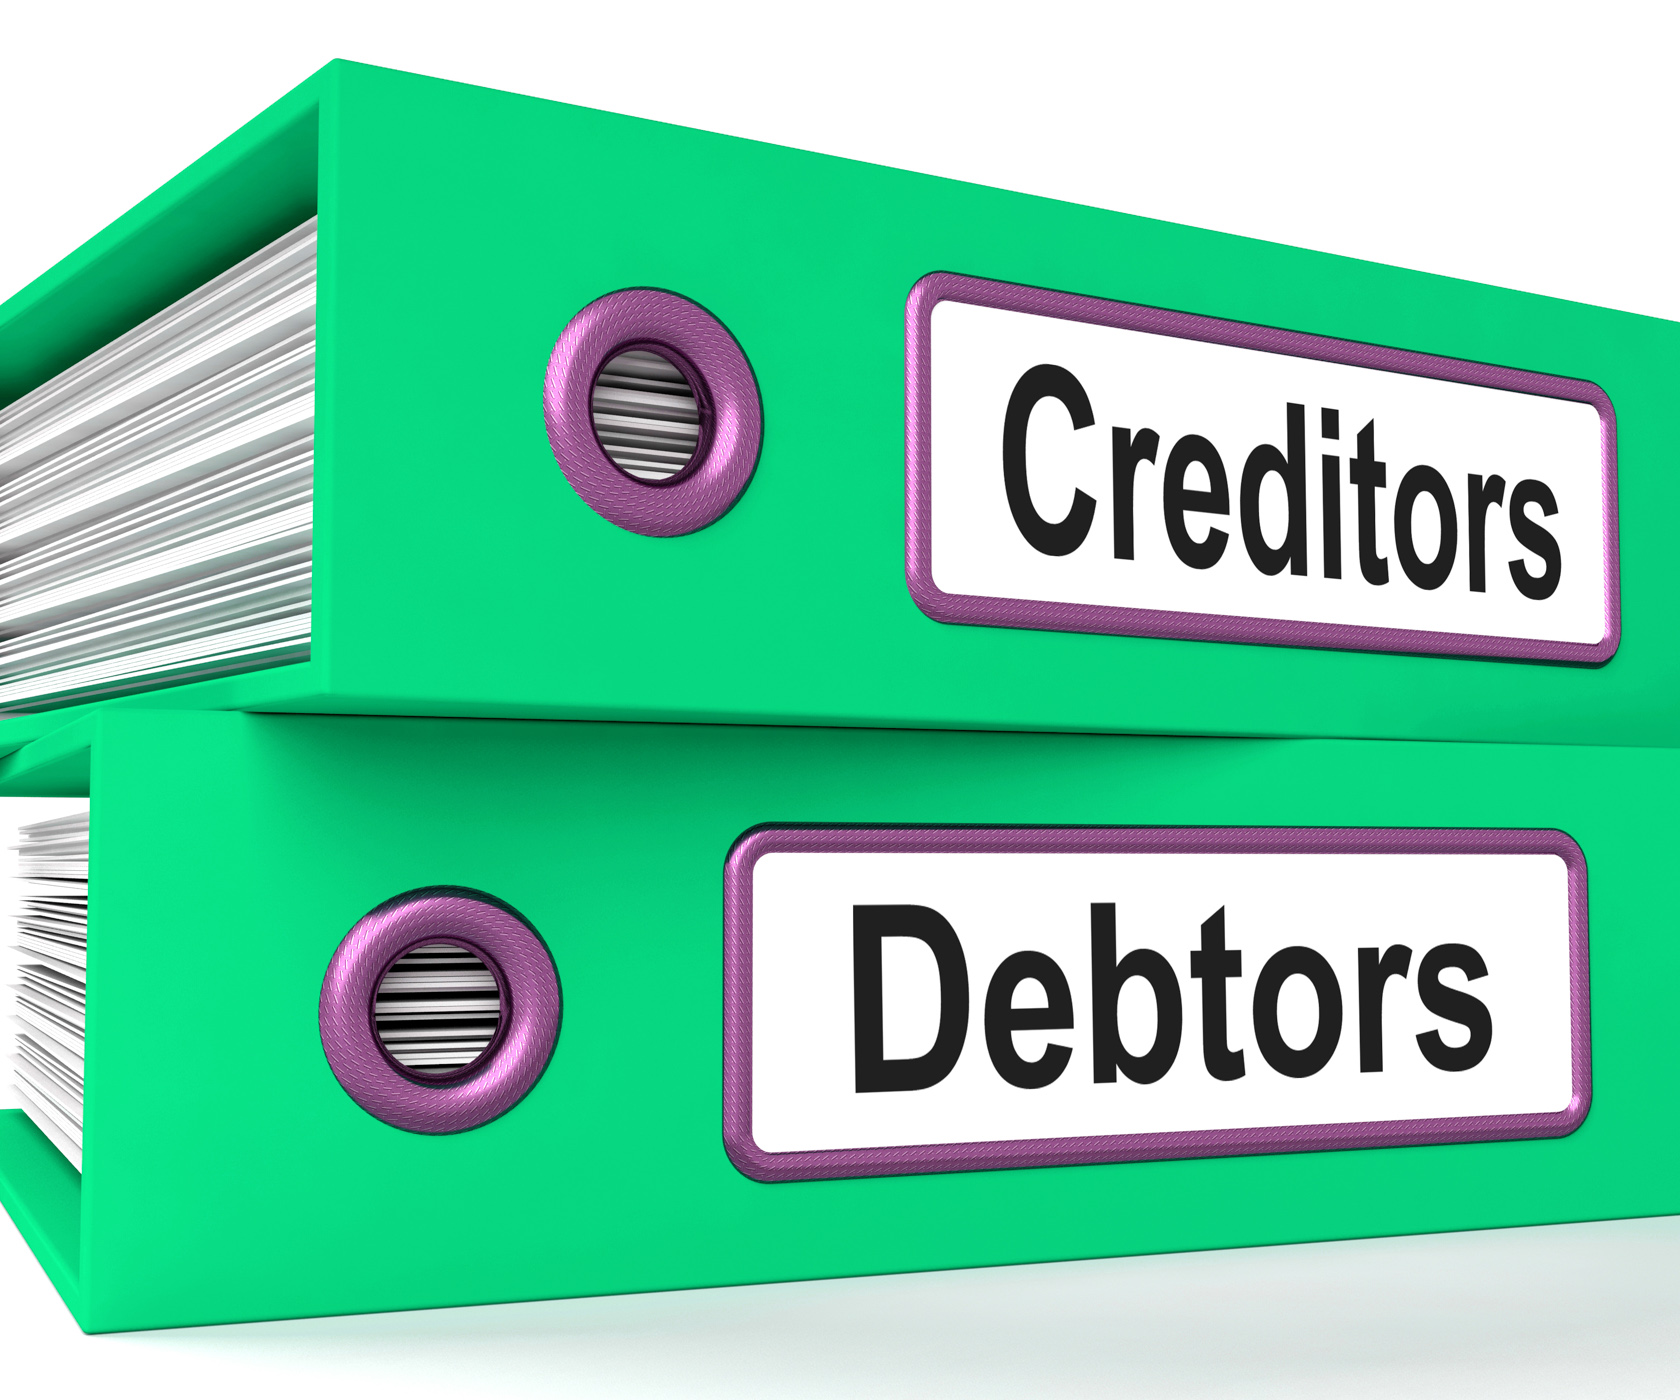 Creditors debtors files shows lending and borrowing photo